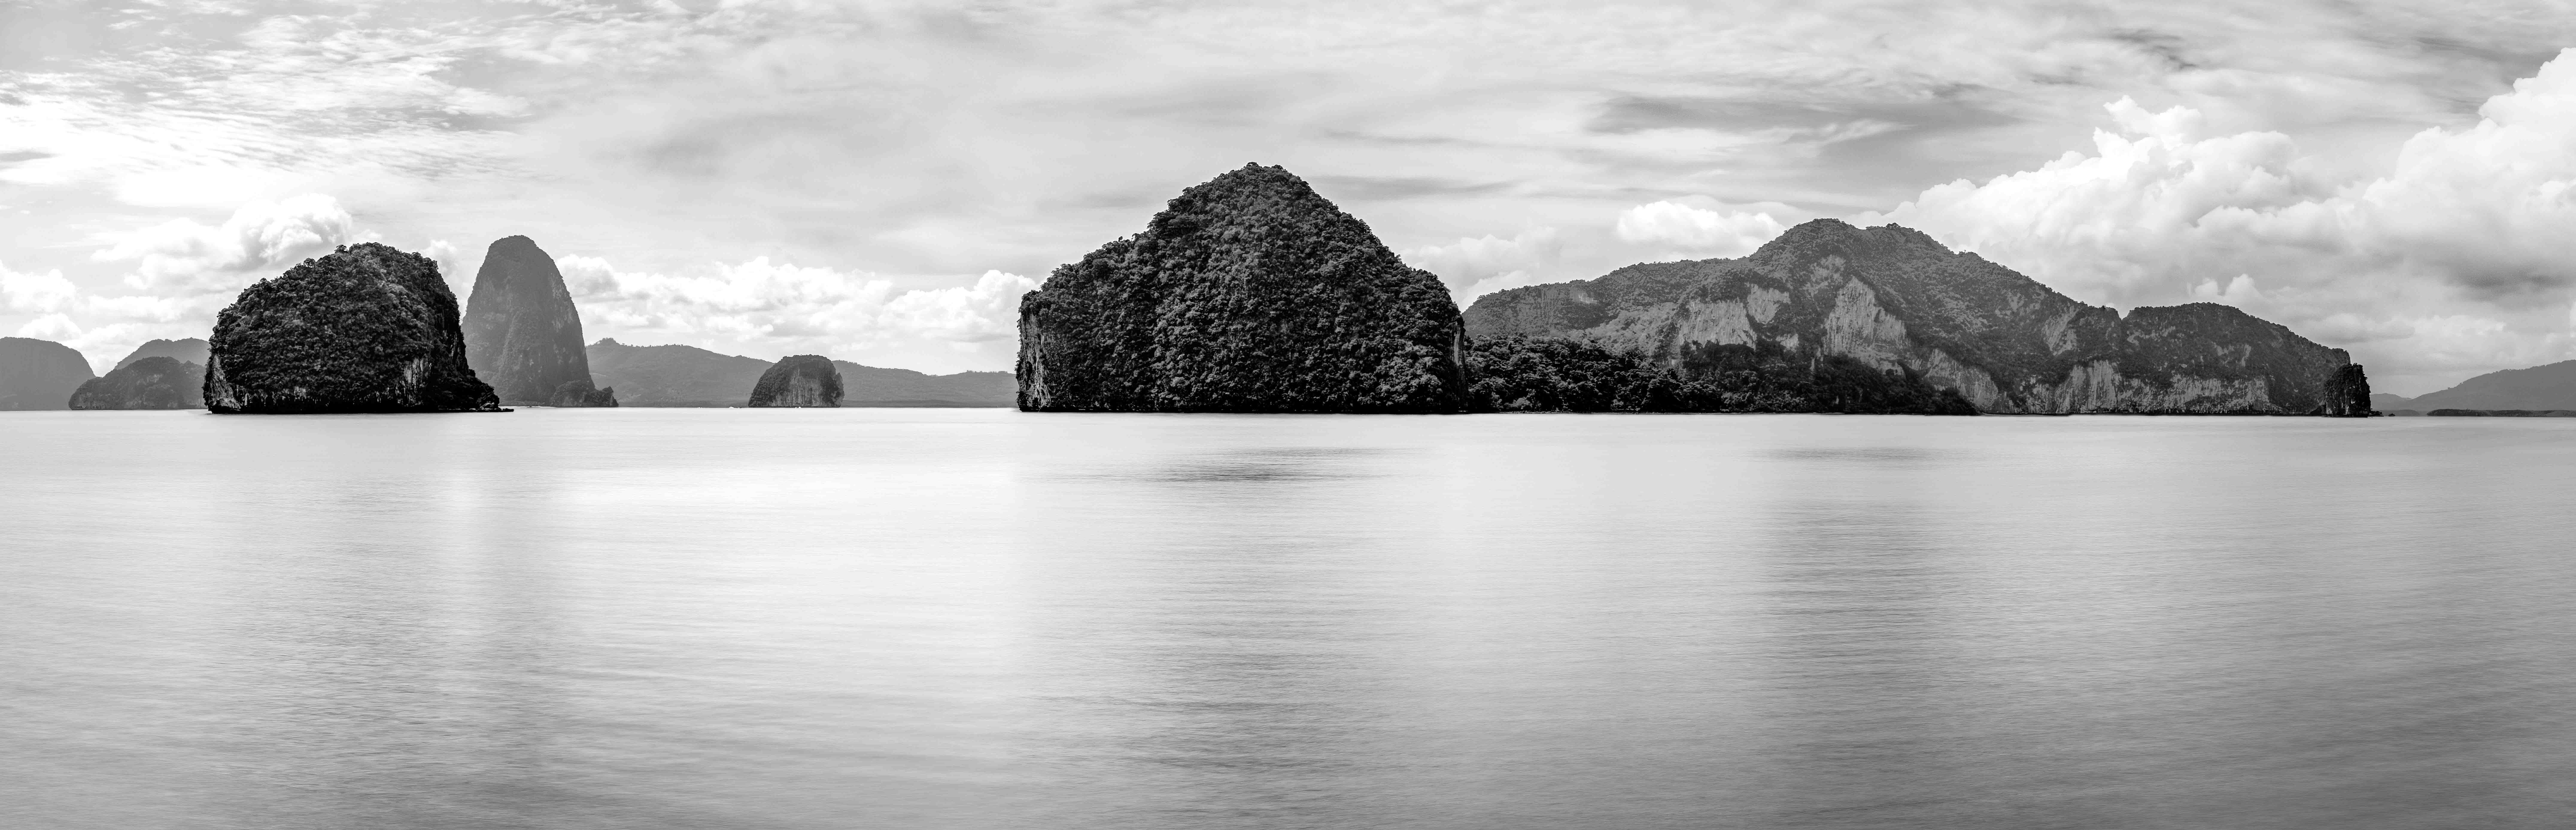 Horizon Events (Phang Nga Bay) by Mark Bargen